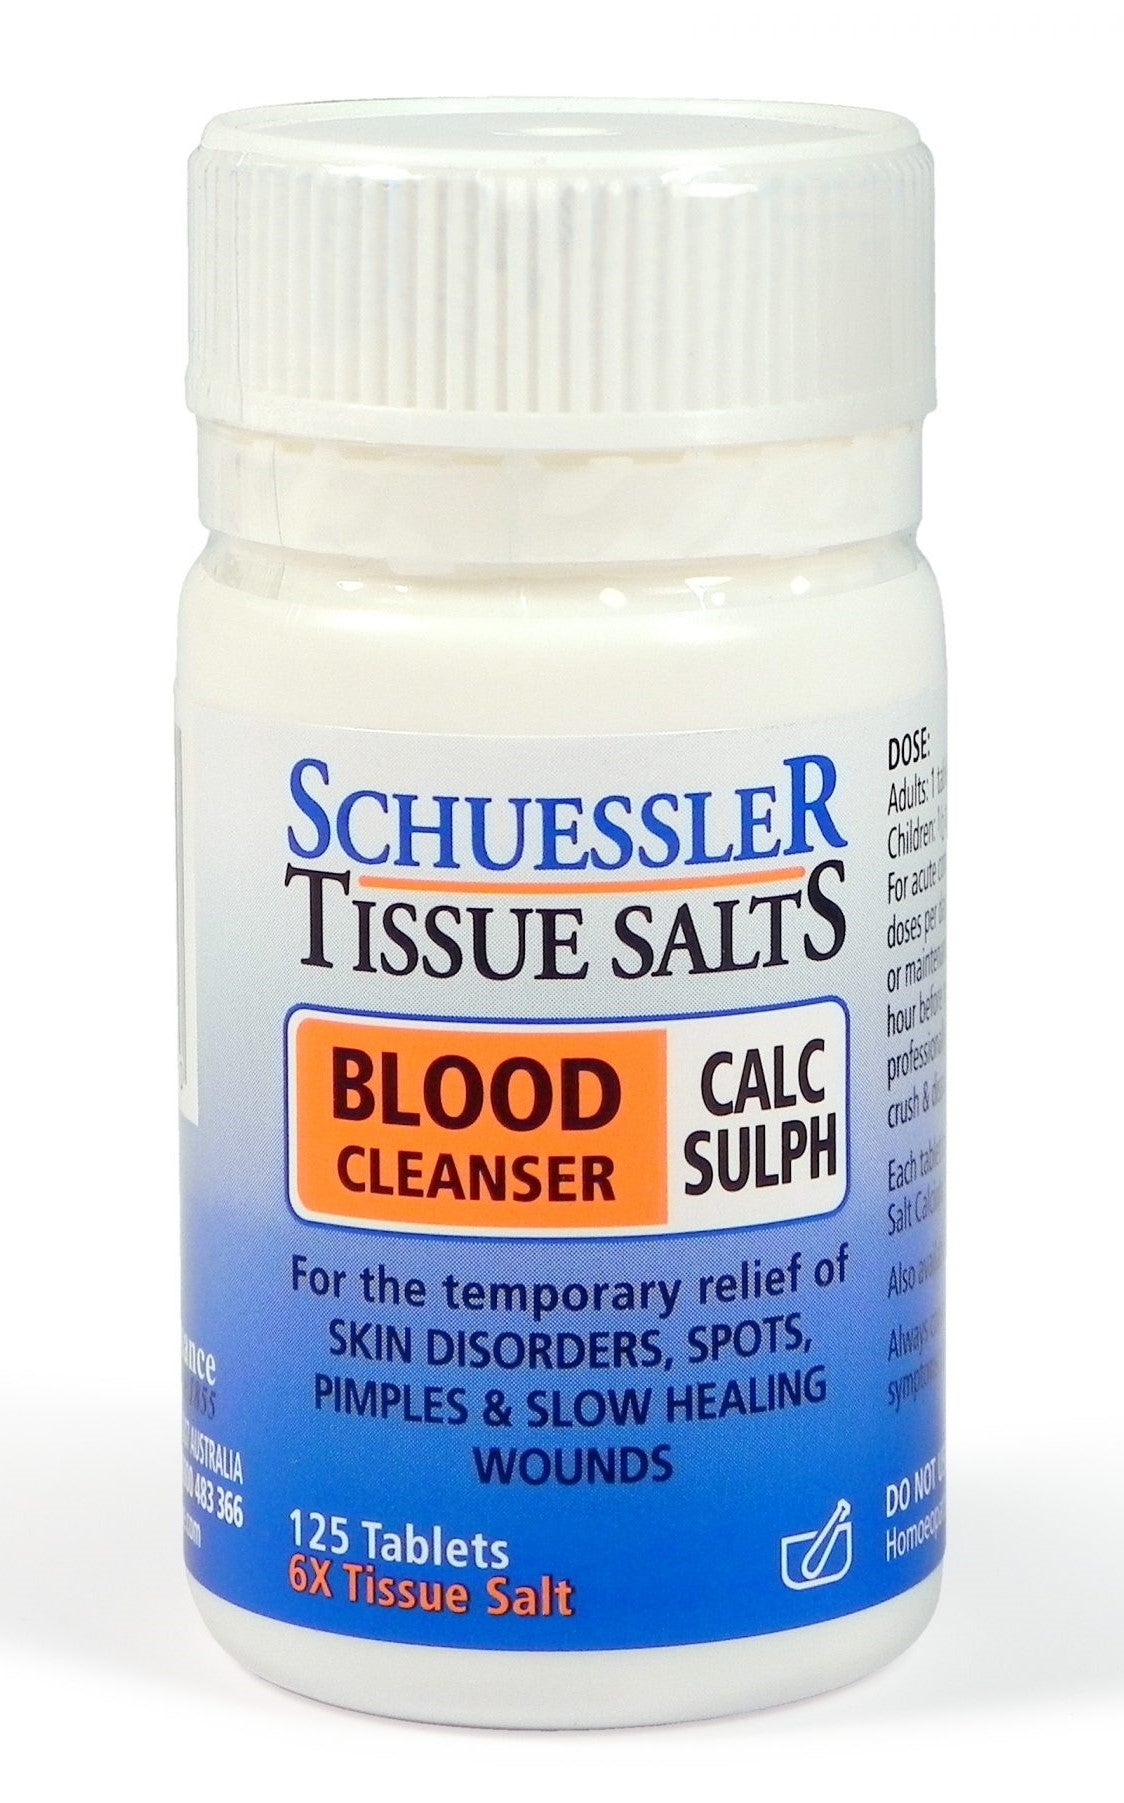 Schuessler Tissue Salts Blood Cleanser Calc Sulph Tablets 125